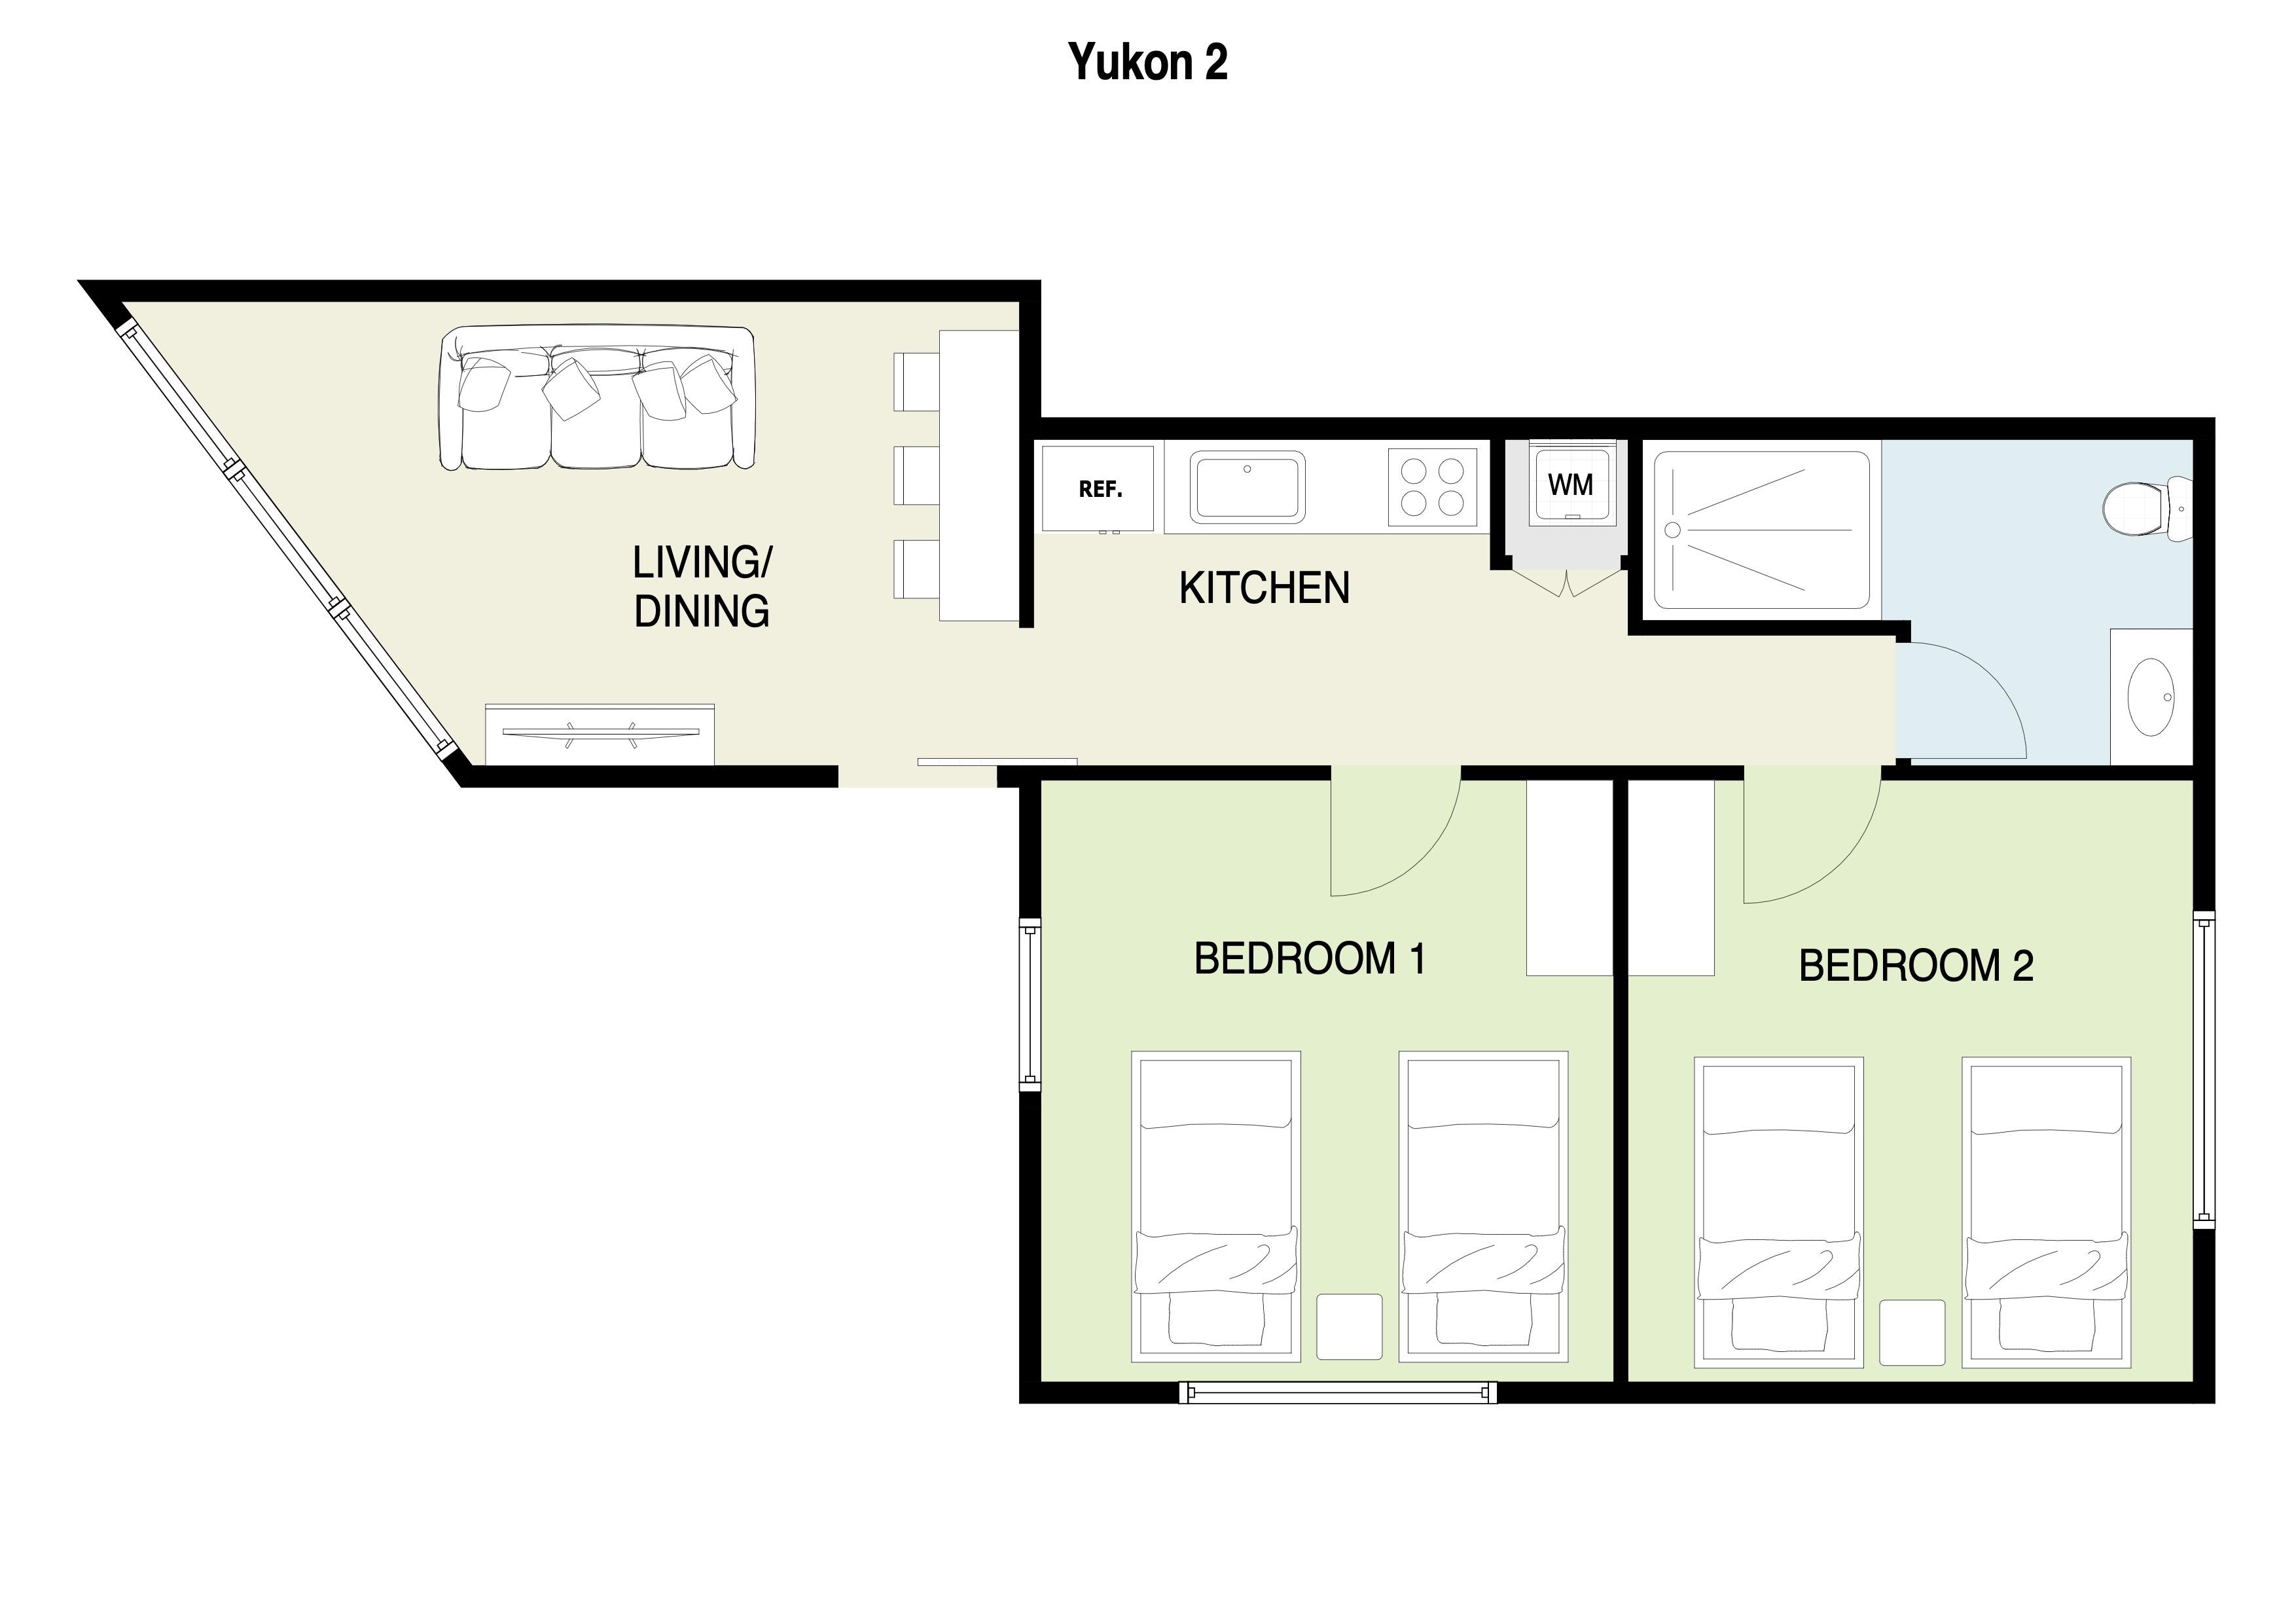 Yukon 2 floor plan